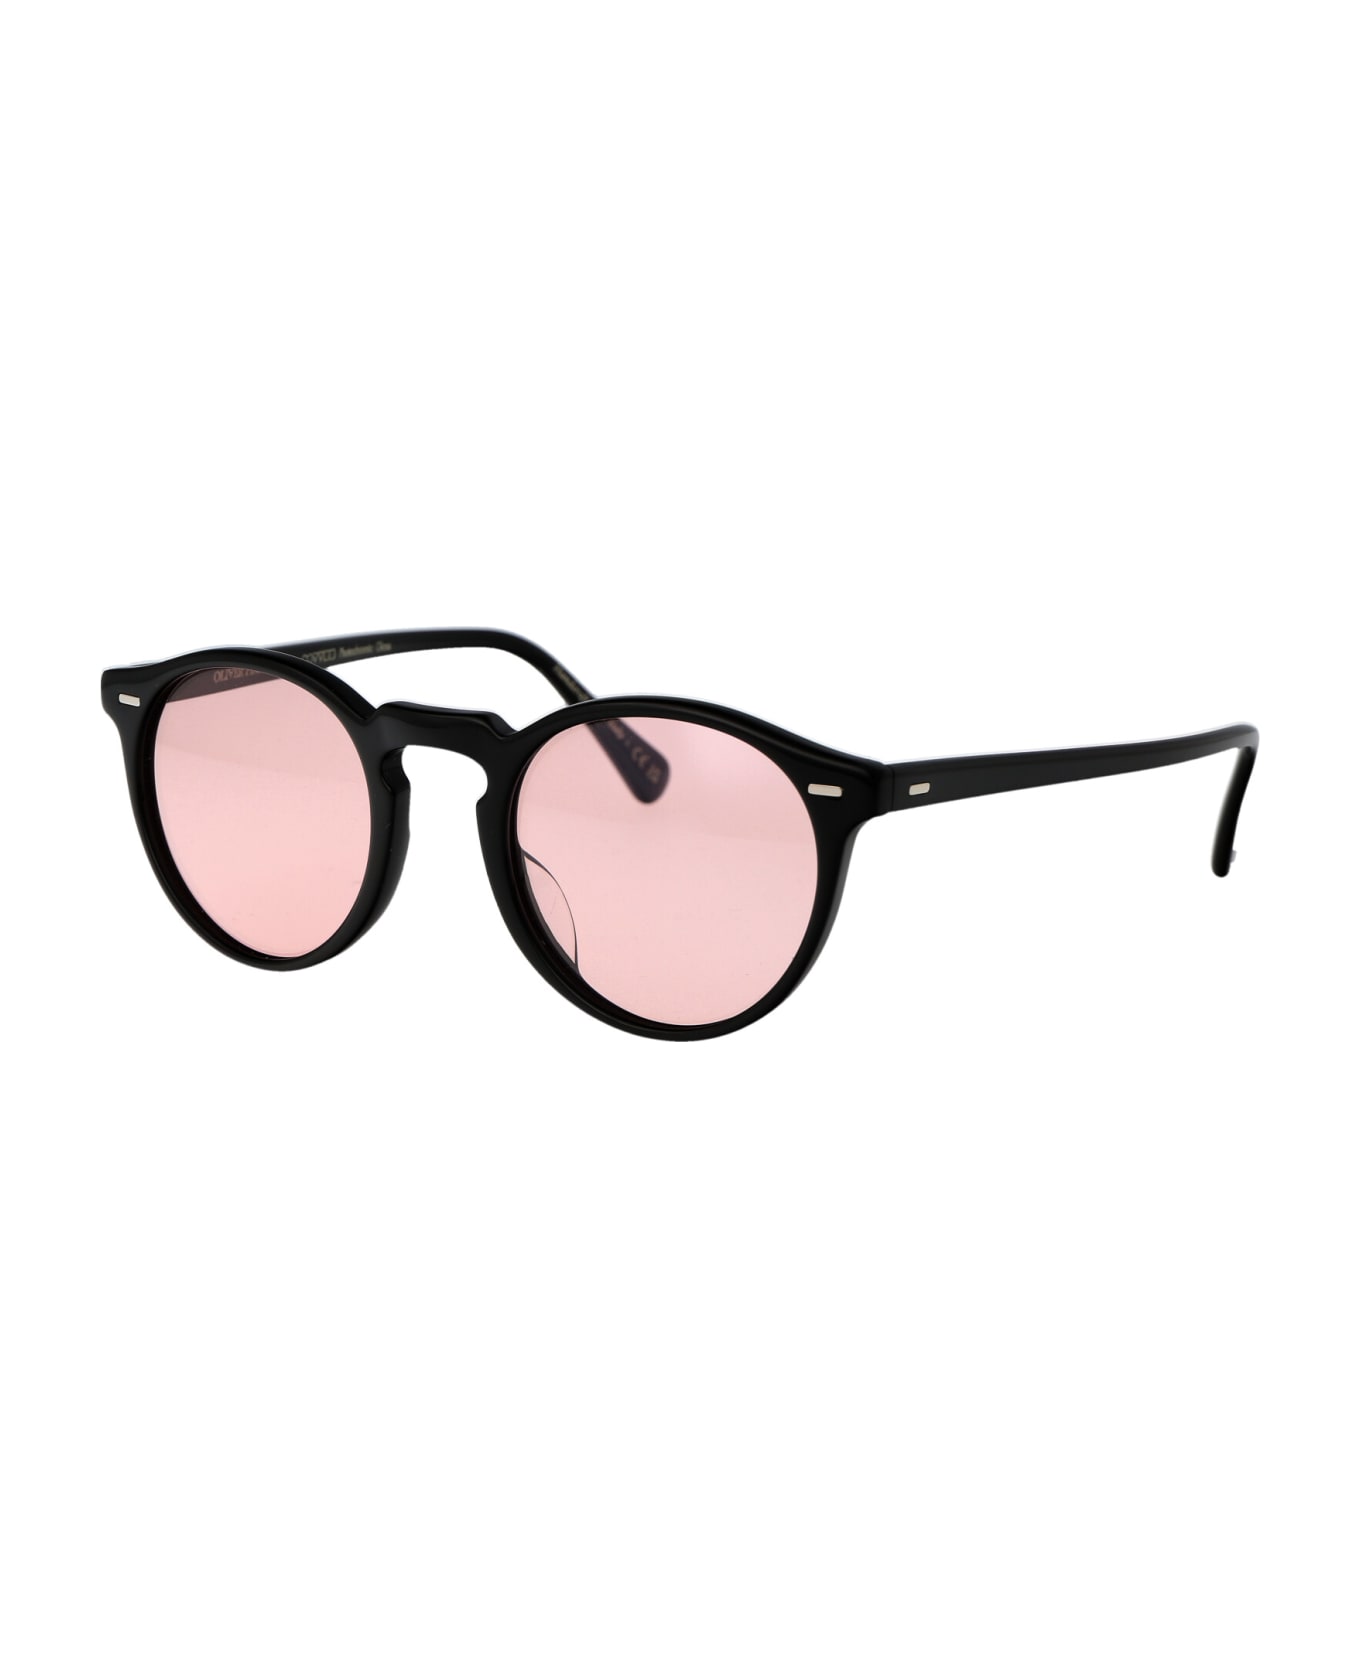 Oliver Peoples Gregory Peck Sun Sunglasses - 10054Q Black サングラス